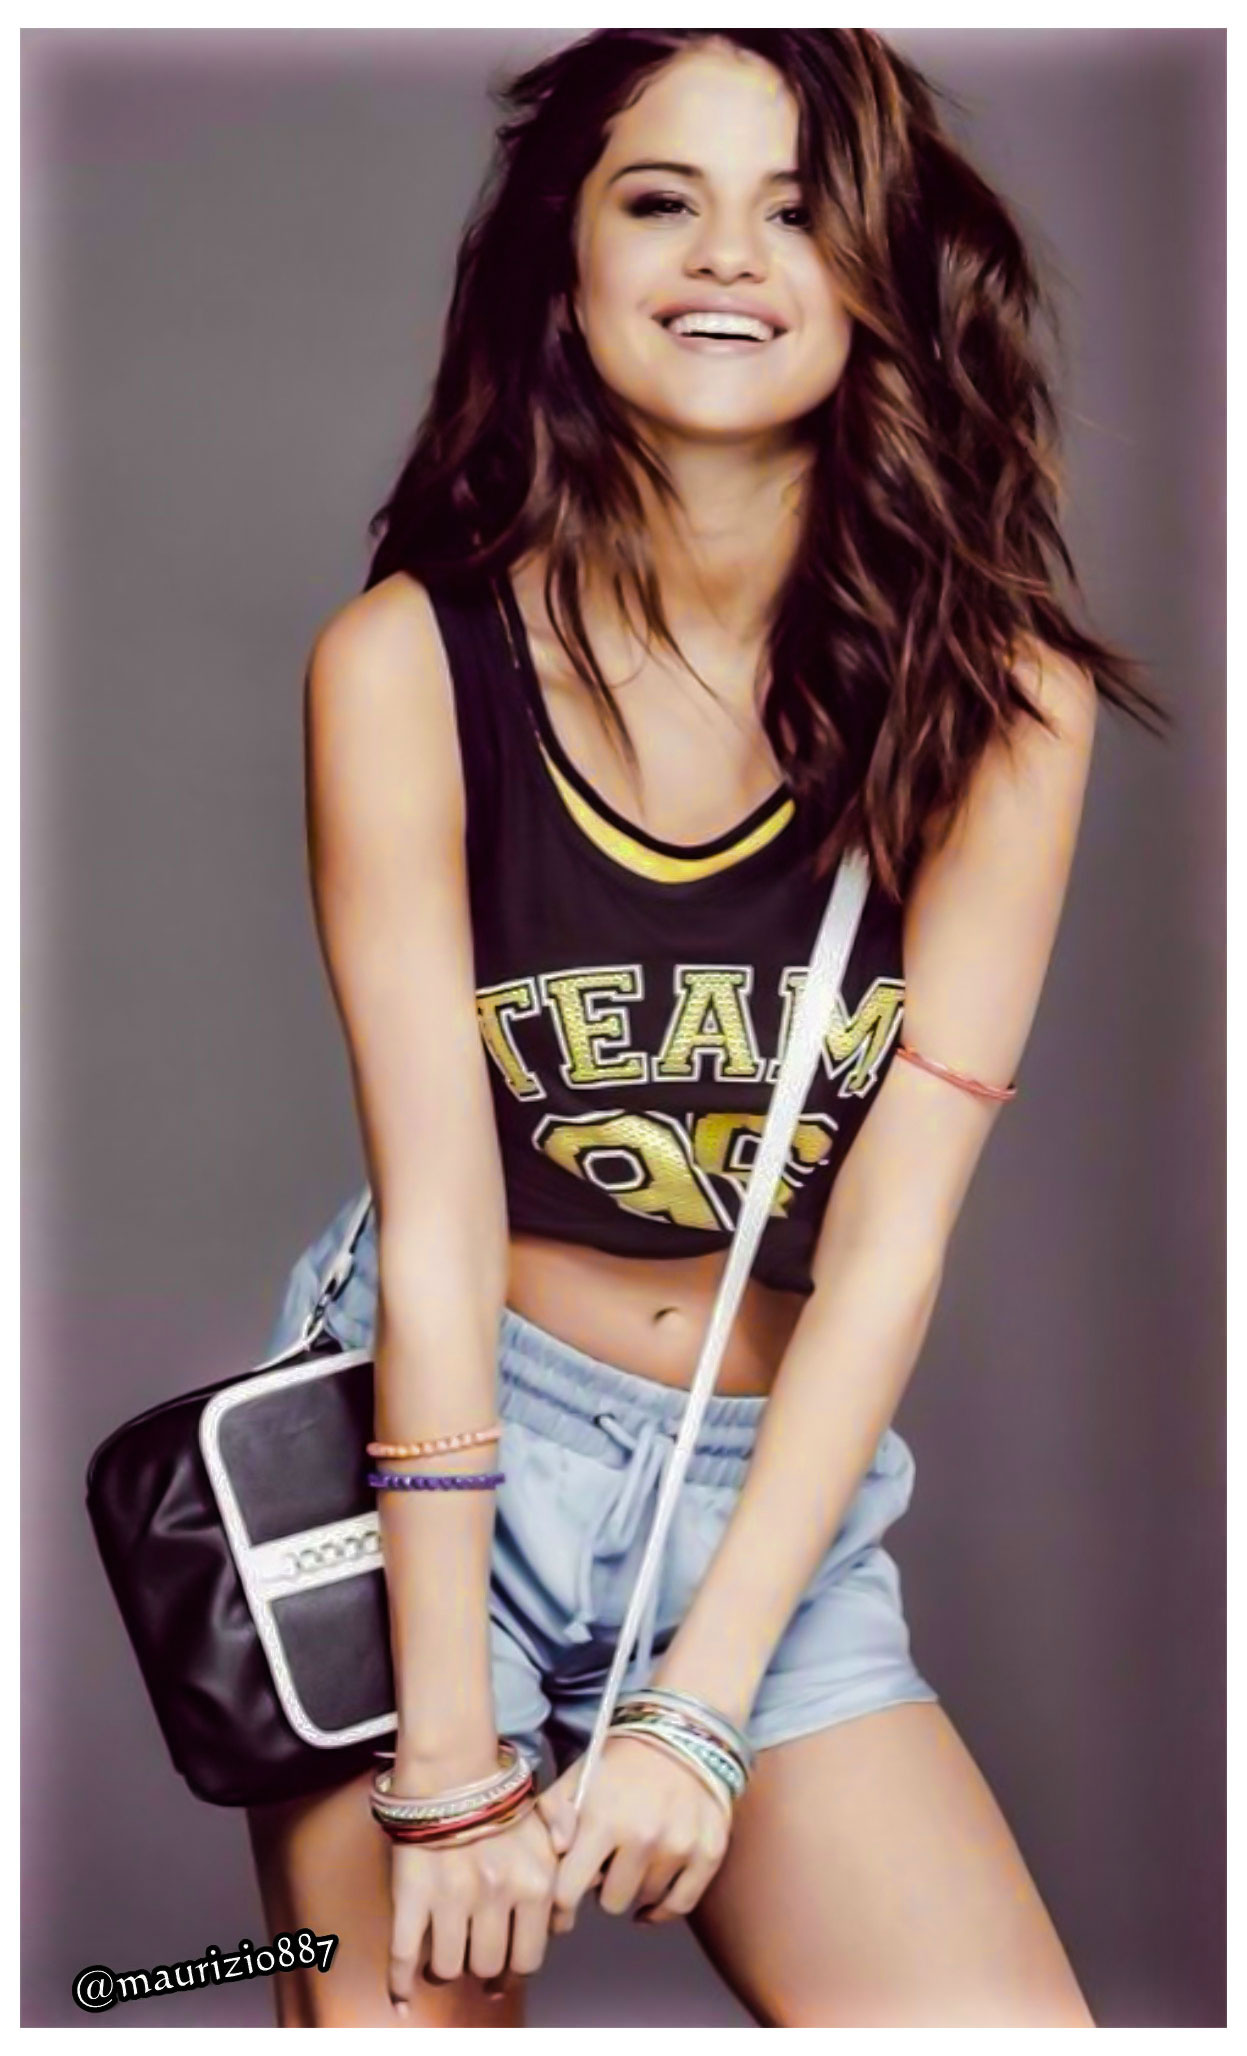 Selena Gomez Image Wallpaper Photos